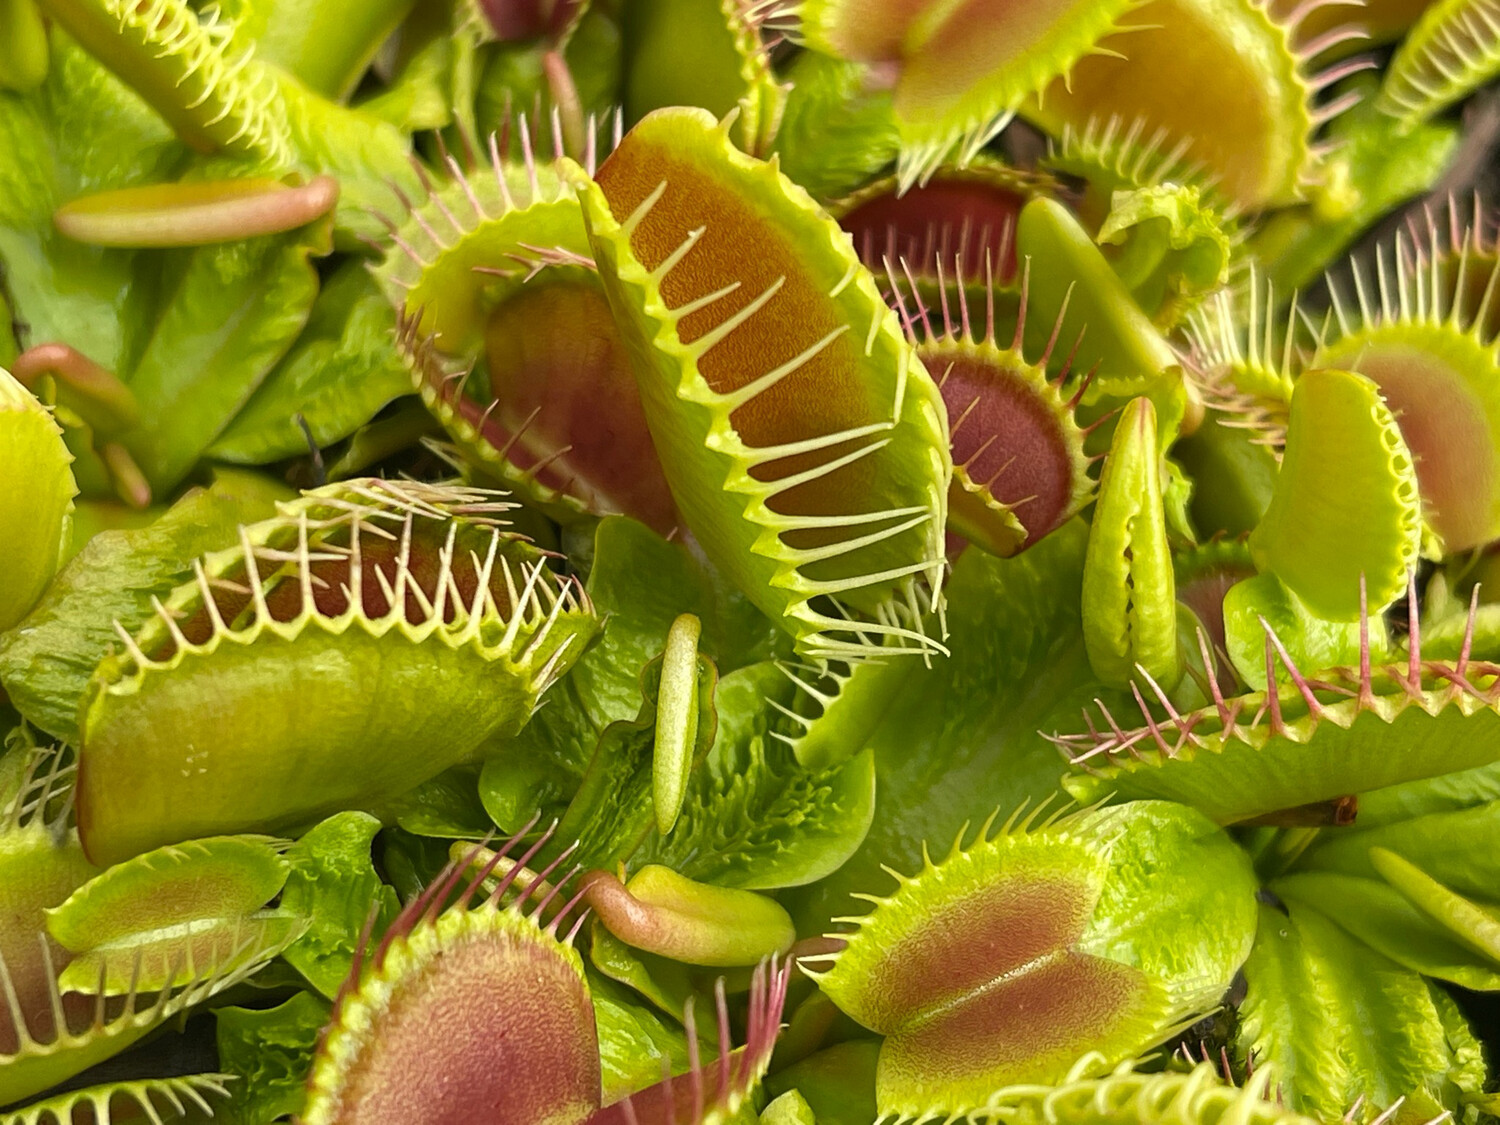 Dionaea muscipula “Schuppenstiel” Venus Flytrap (small)